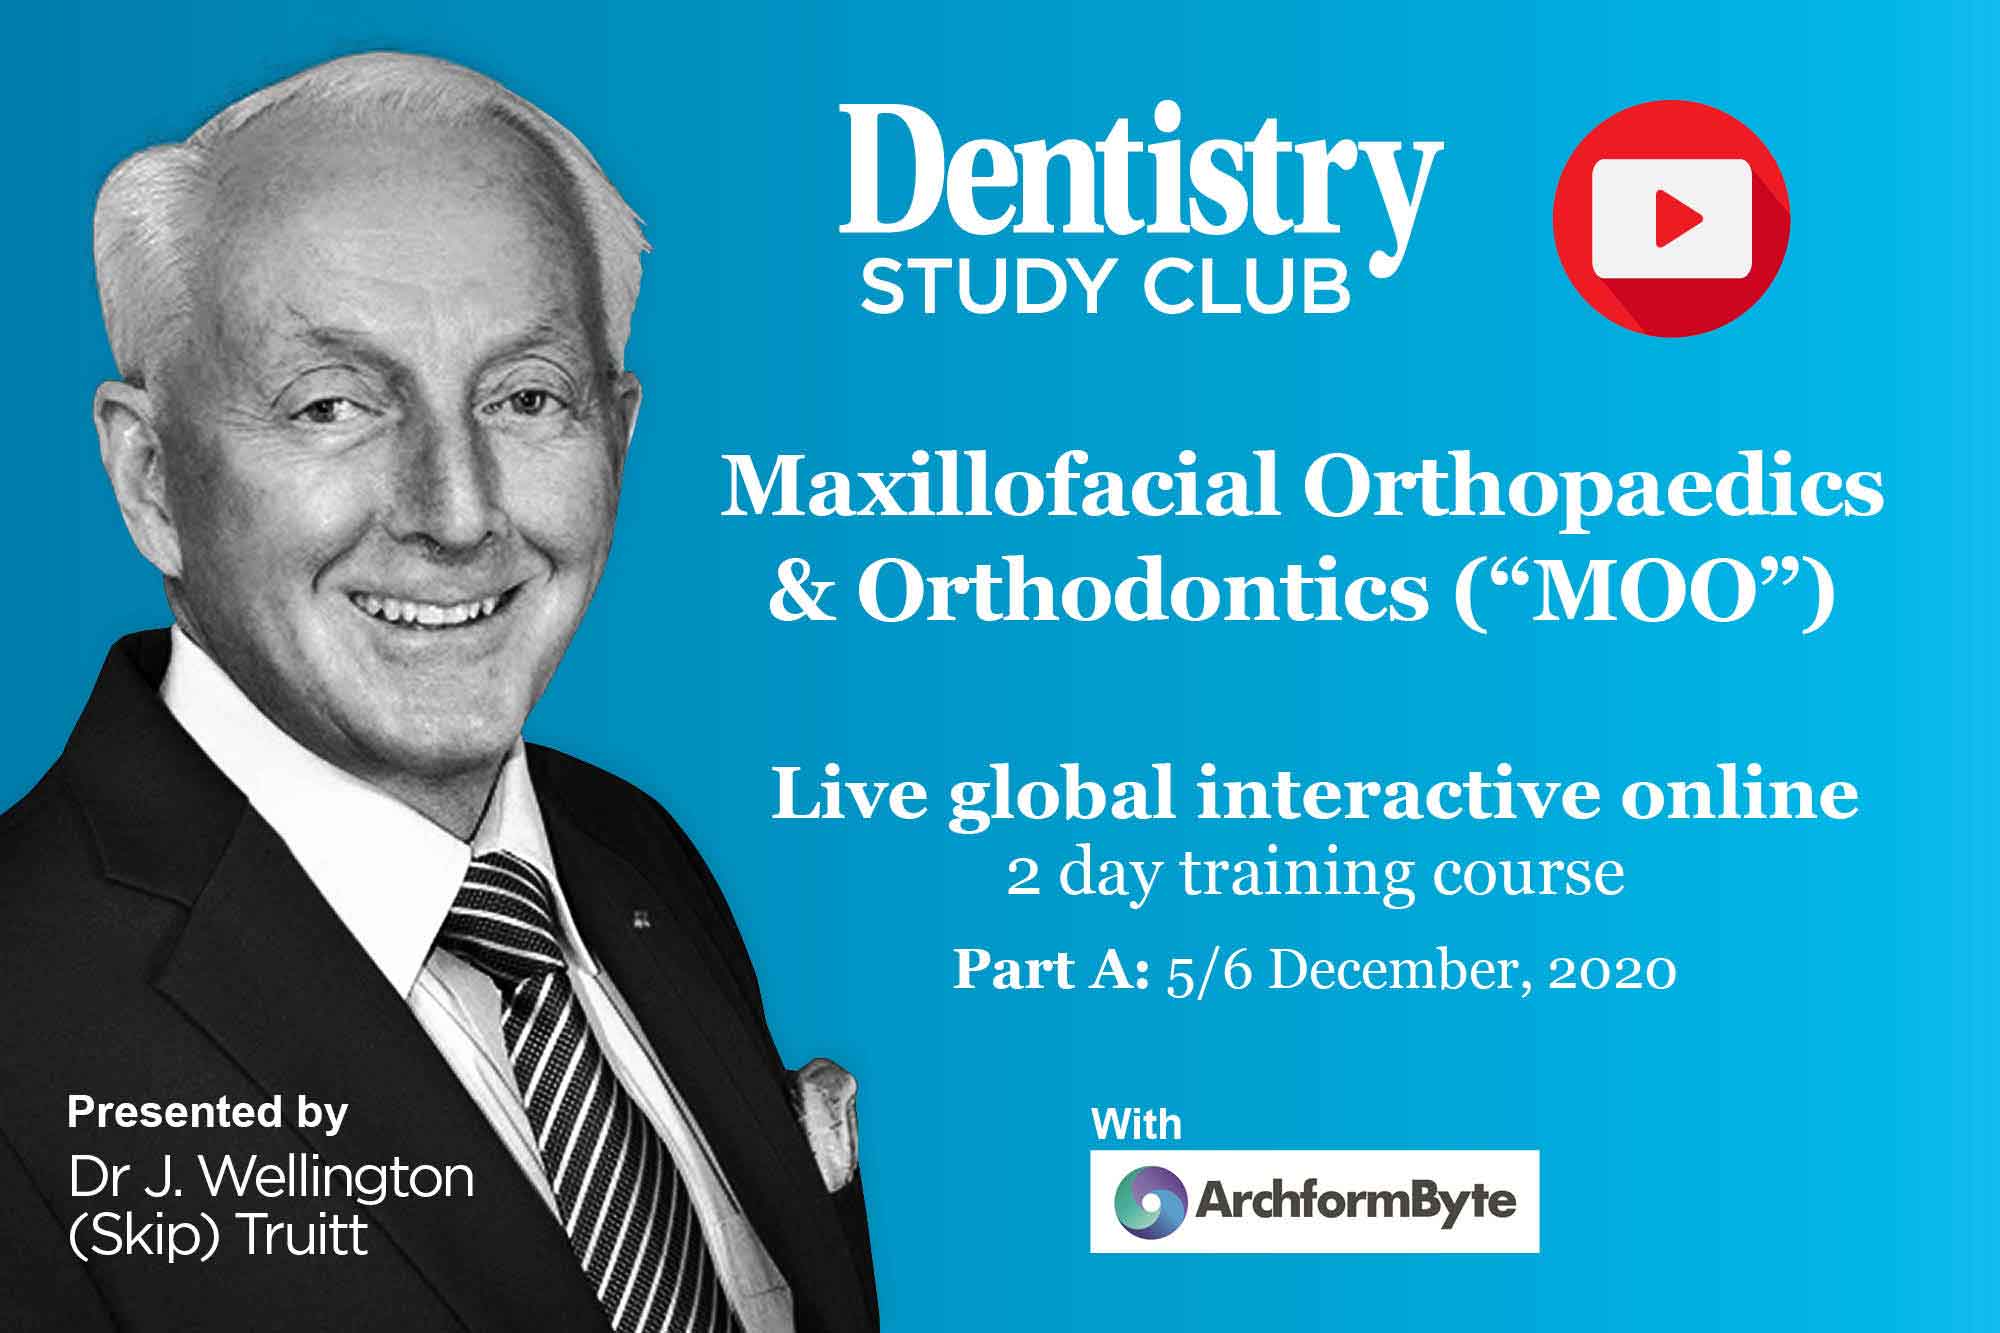 Maxillofacial orthopaedics and orthodontics with Skip Truitt